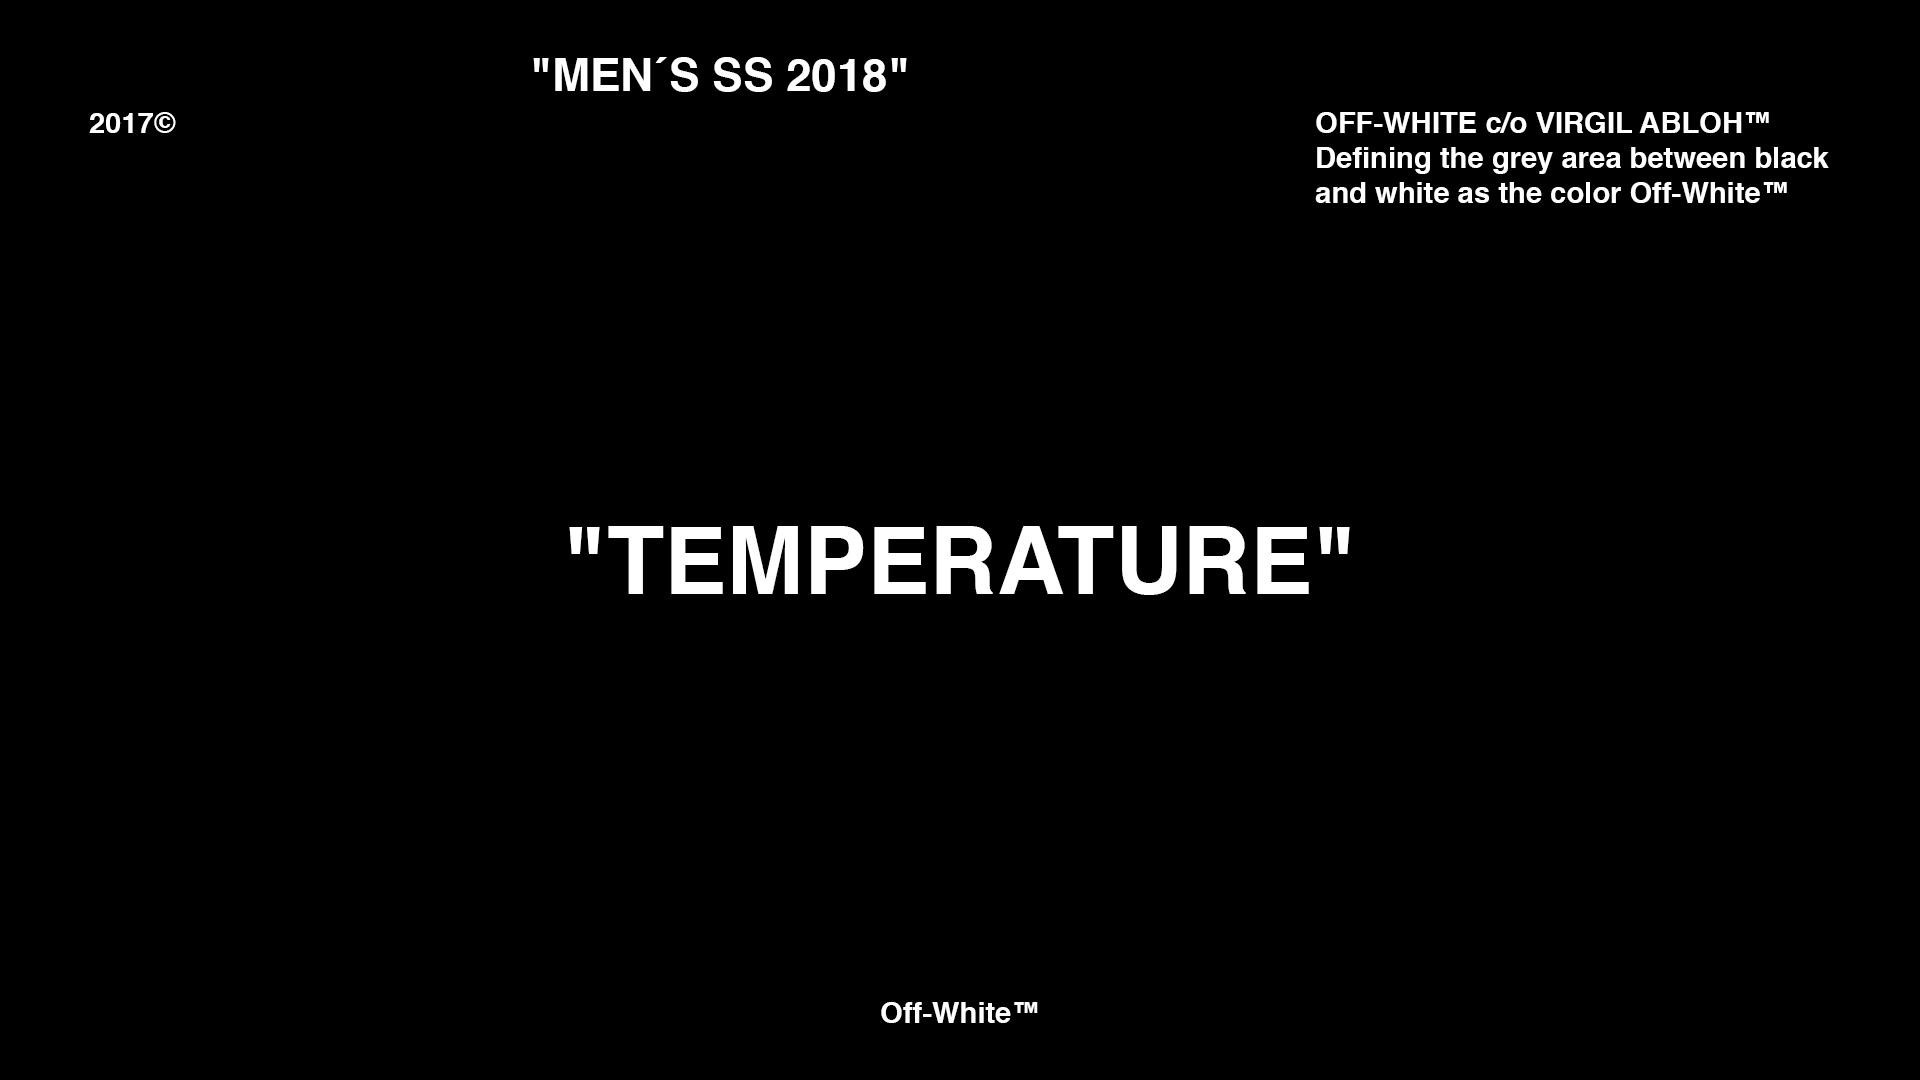 1920x1080 OFF-WHITE Spring/Summer 2018 “TEMPERATURE” show